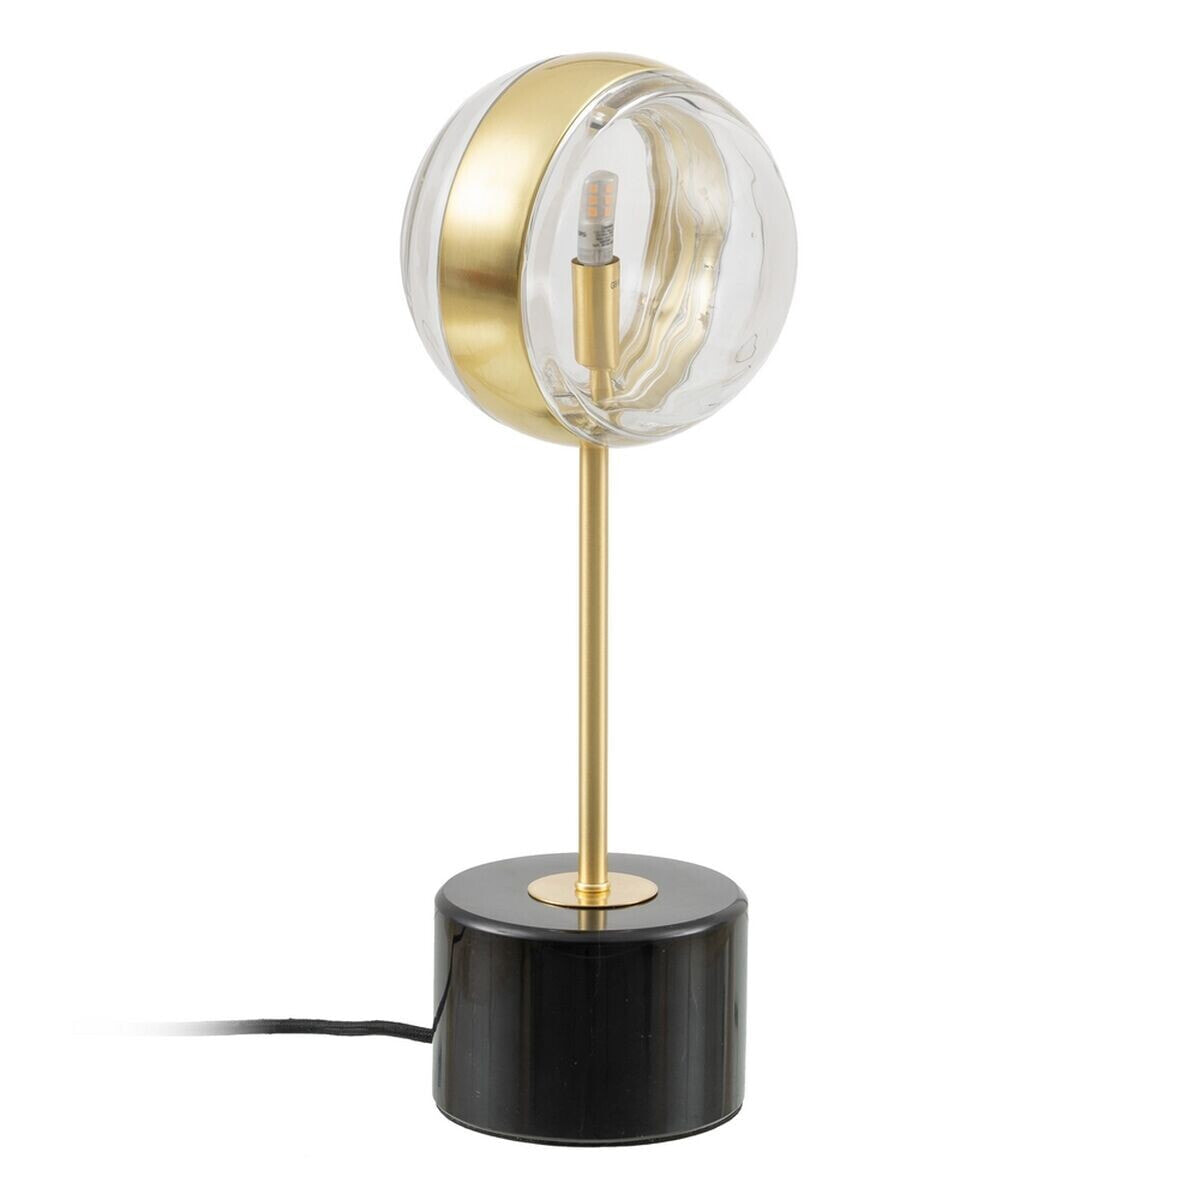 Desk lamp Golden Crystal Marble Iron Hierro/Cristal 28 W 220 V 240 V 220 -240 V 15 x 15 x 40 cm